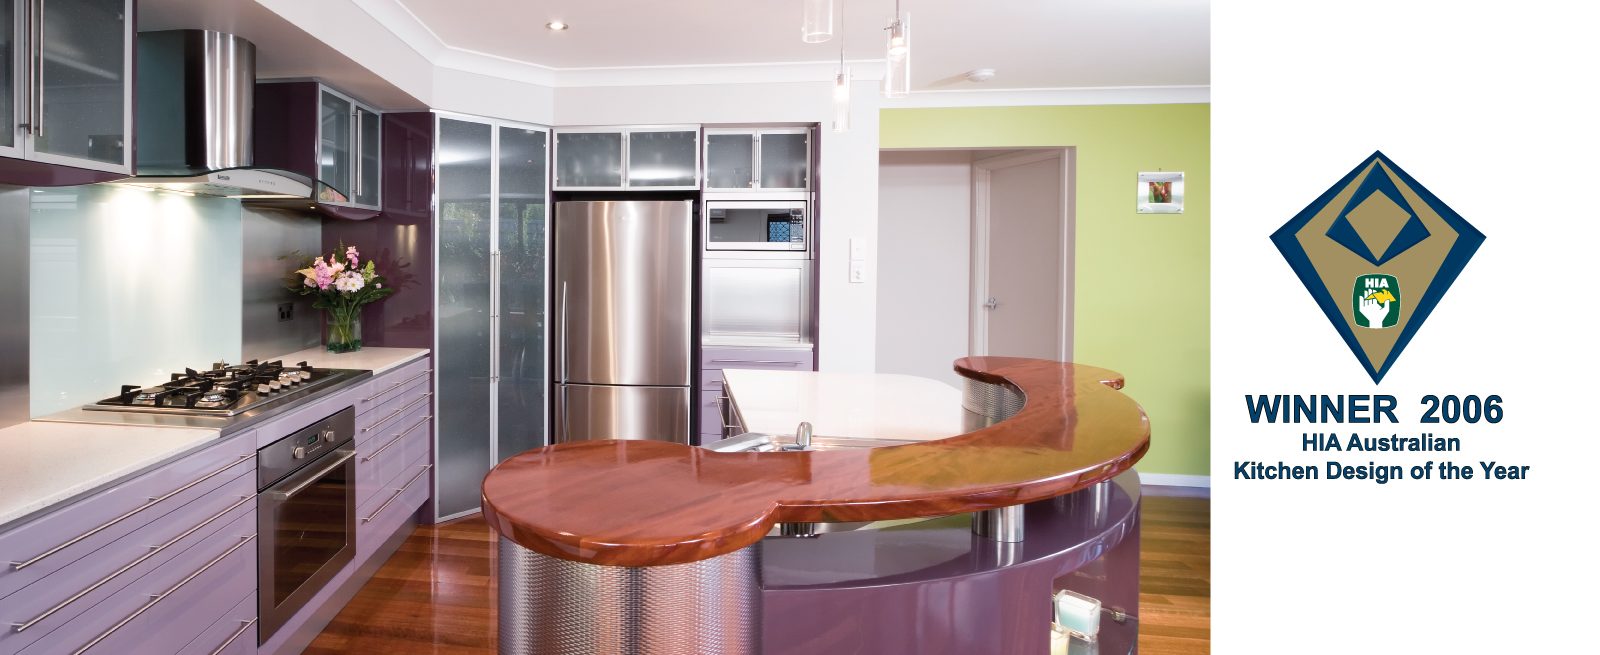 HIA Australian Kitchen Design of the Year - Kim Duffin